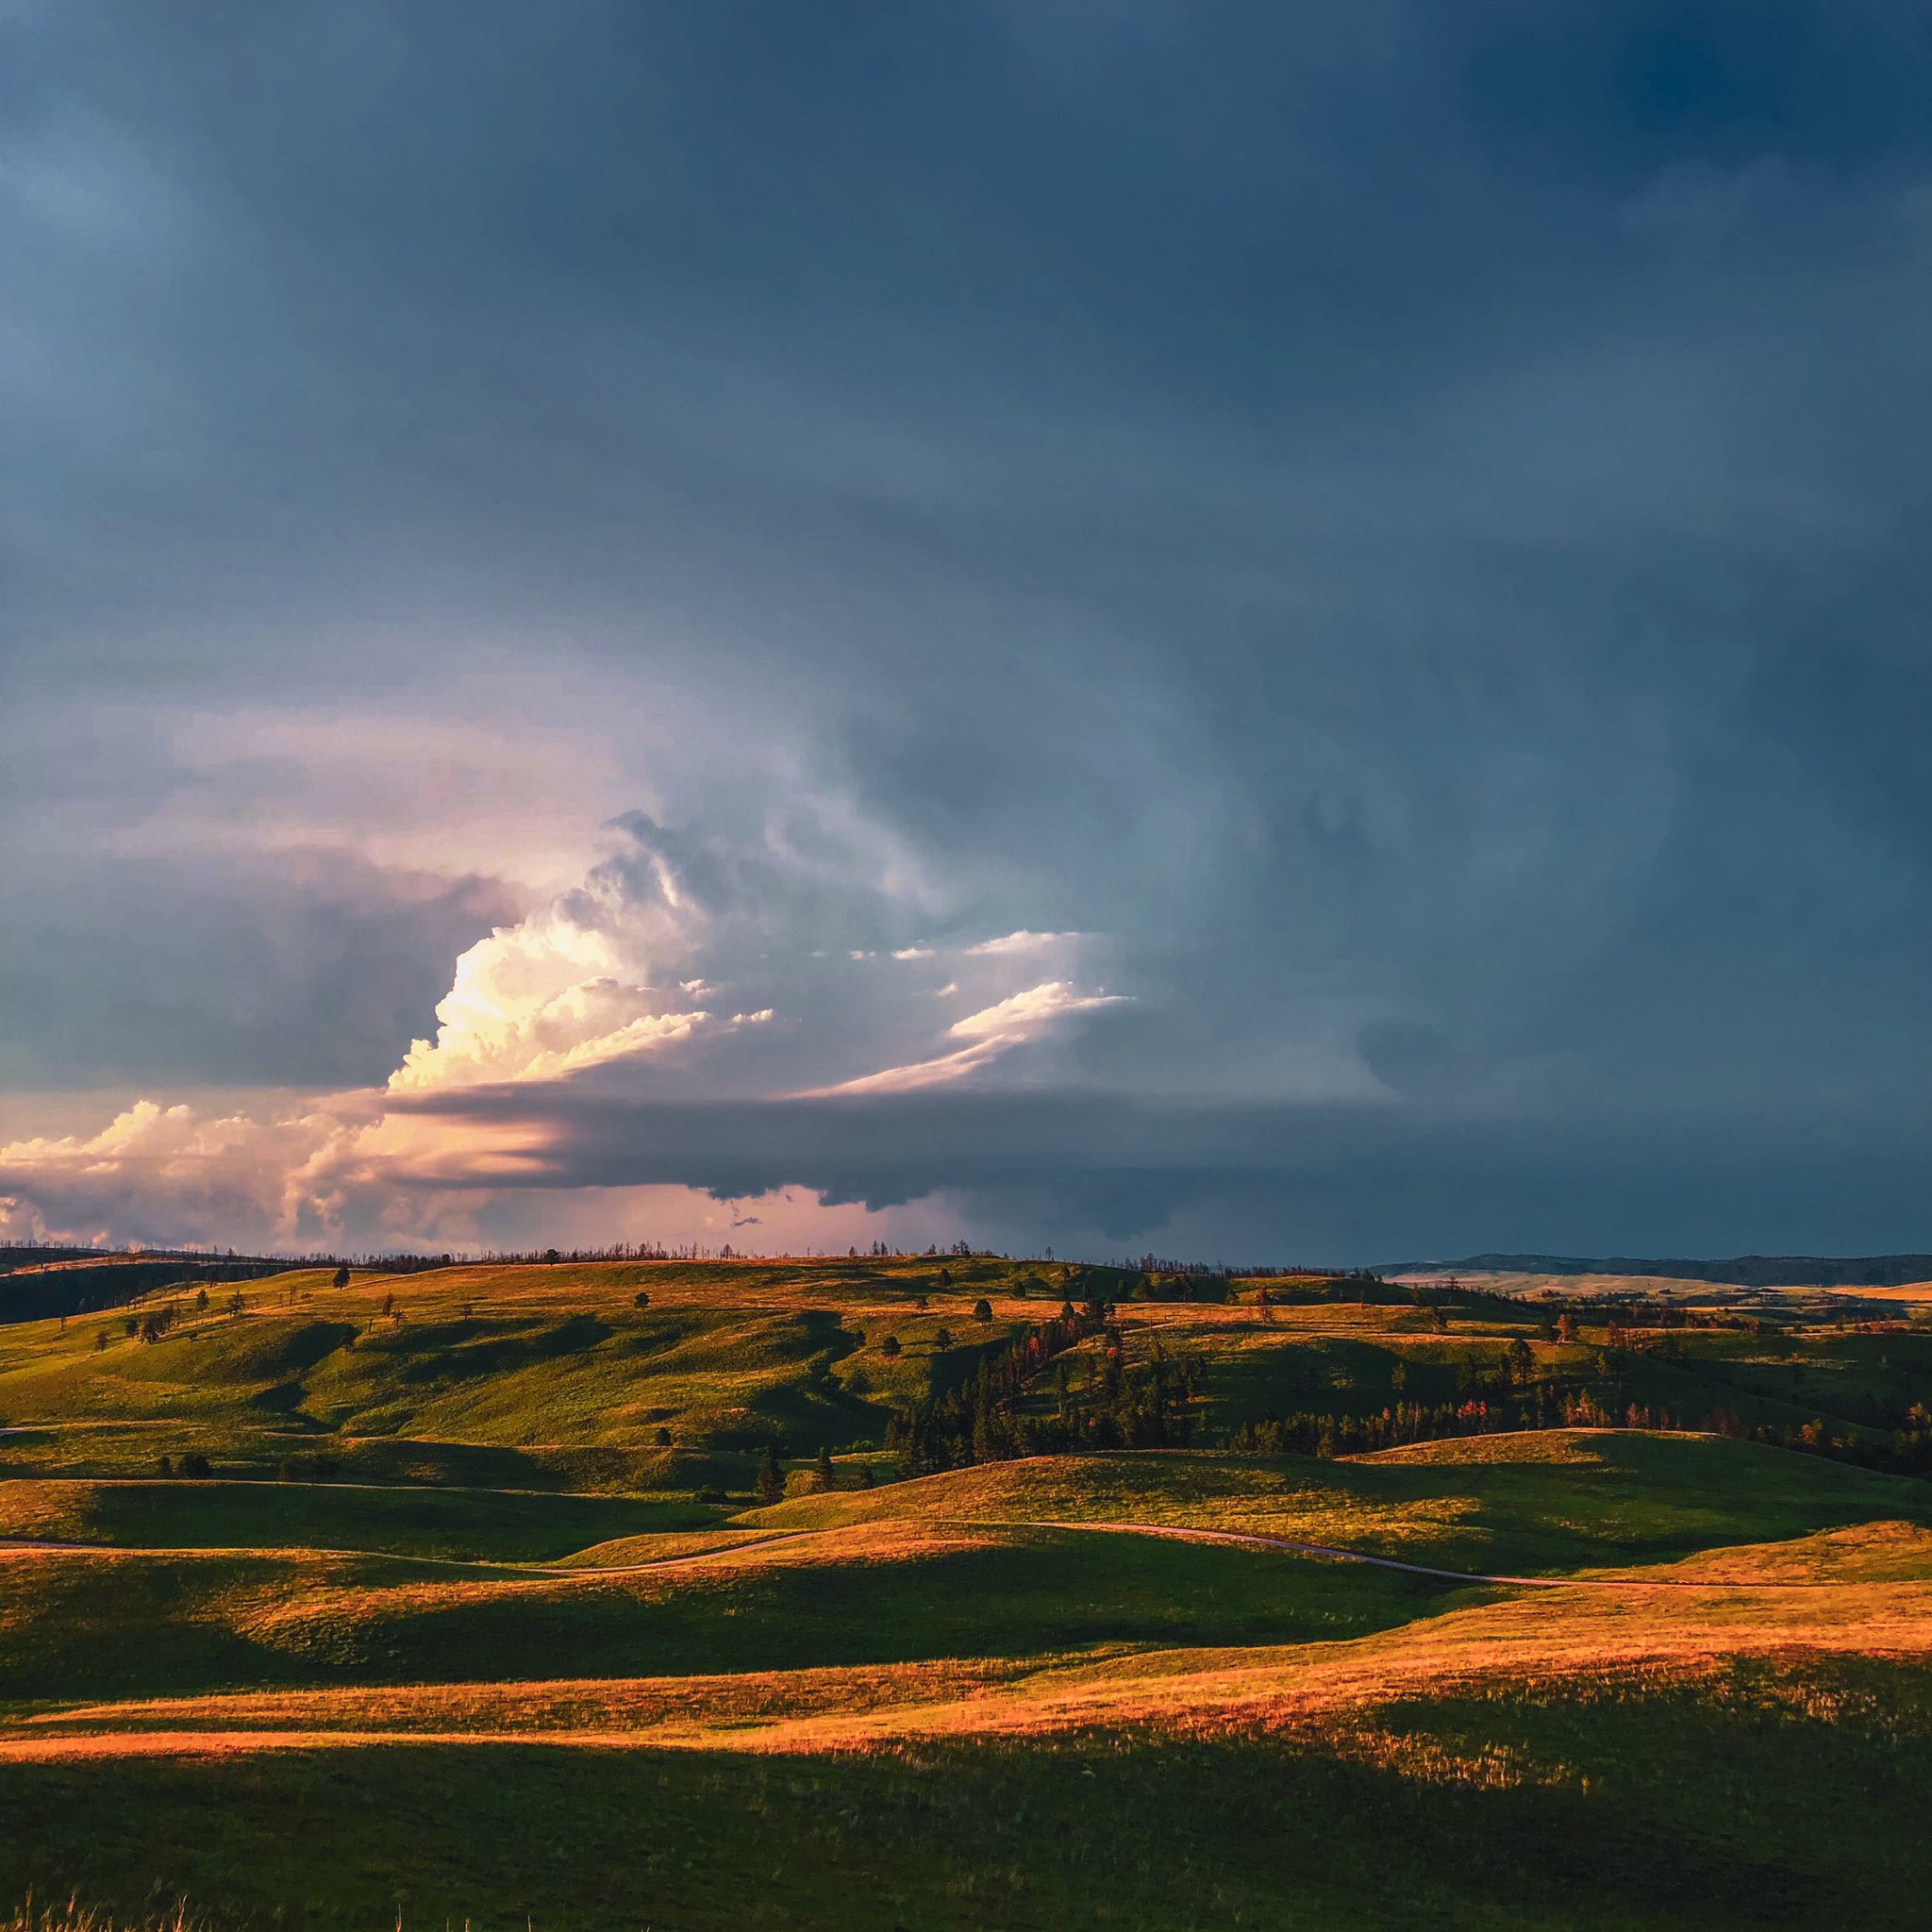 2nd Place Supercell thunderstorm in Rapic City South Dakota by Asa Sadowsky @AsaSadowsky